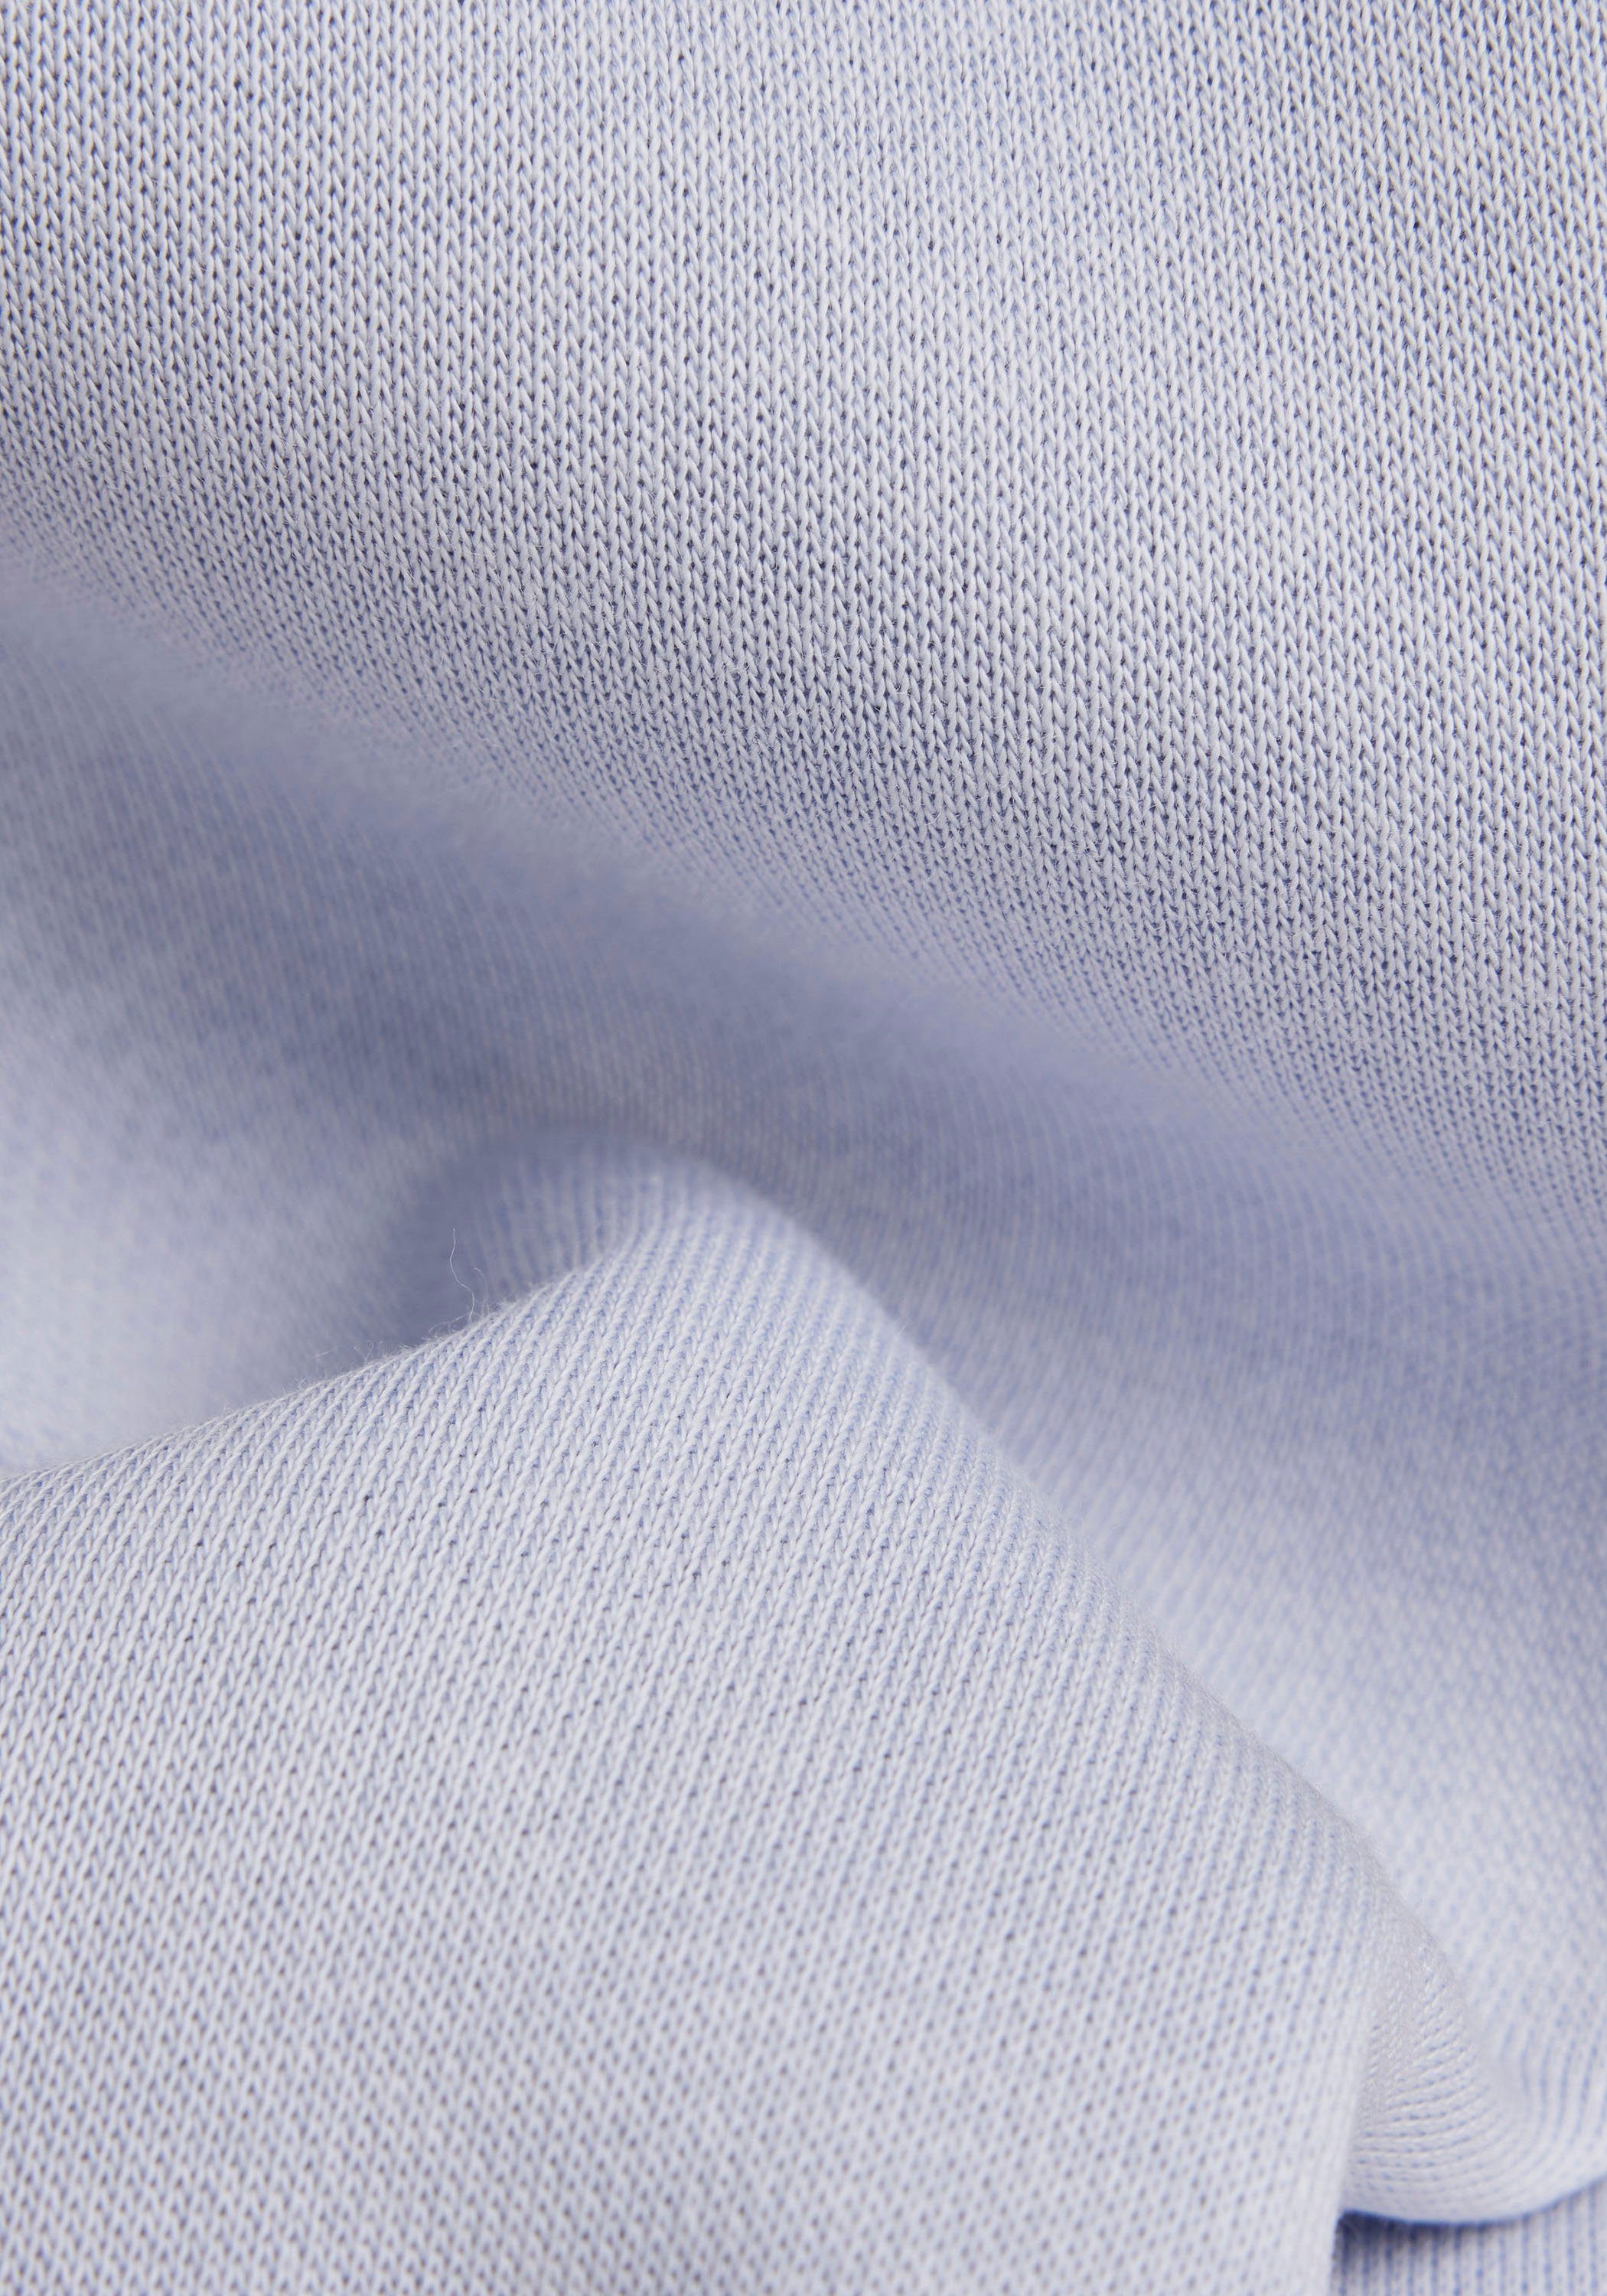 icelandic Sweatshirt Premium blue 2.0 RAW G-Star core